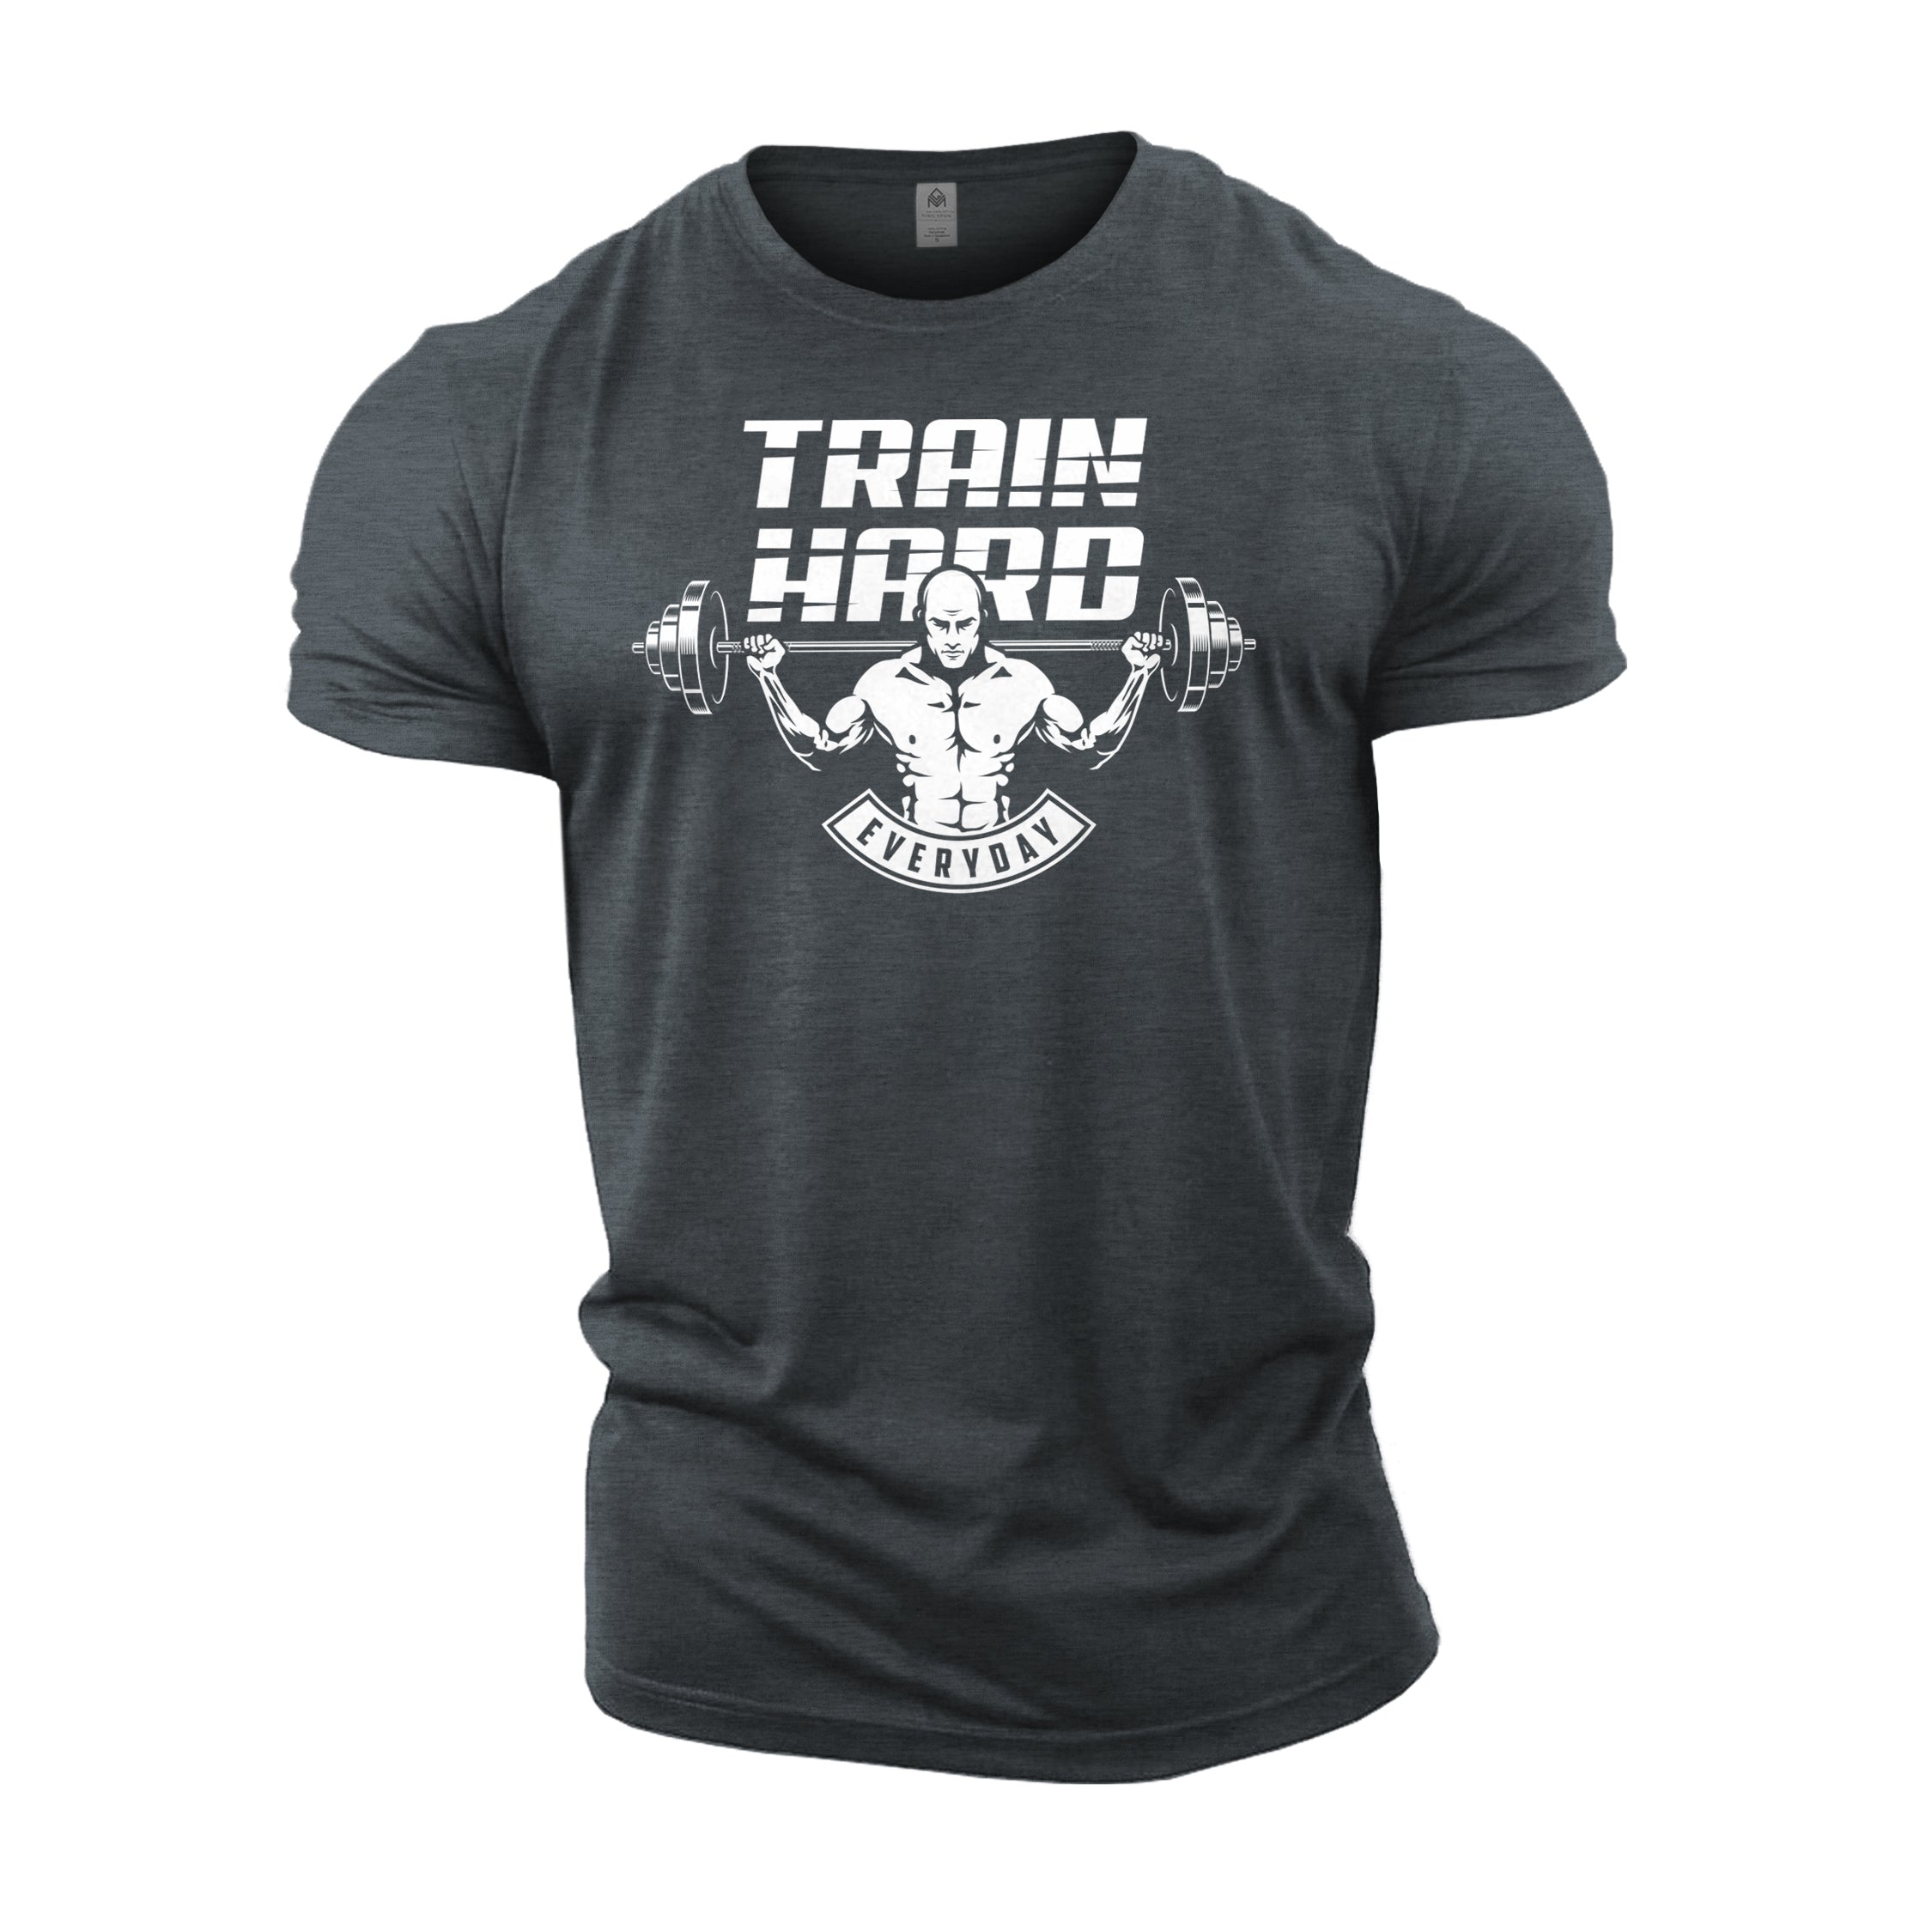 Train Hard Everyday - Gym T-Shirt